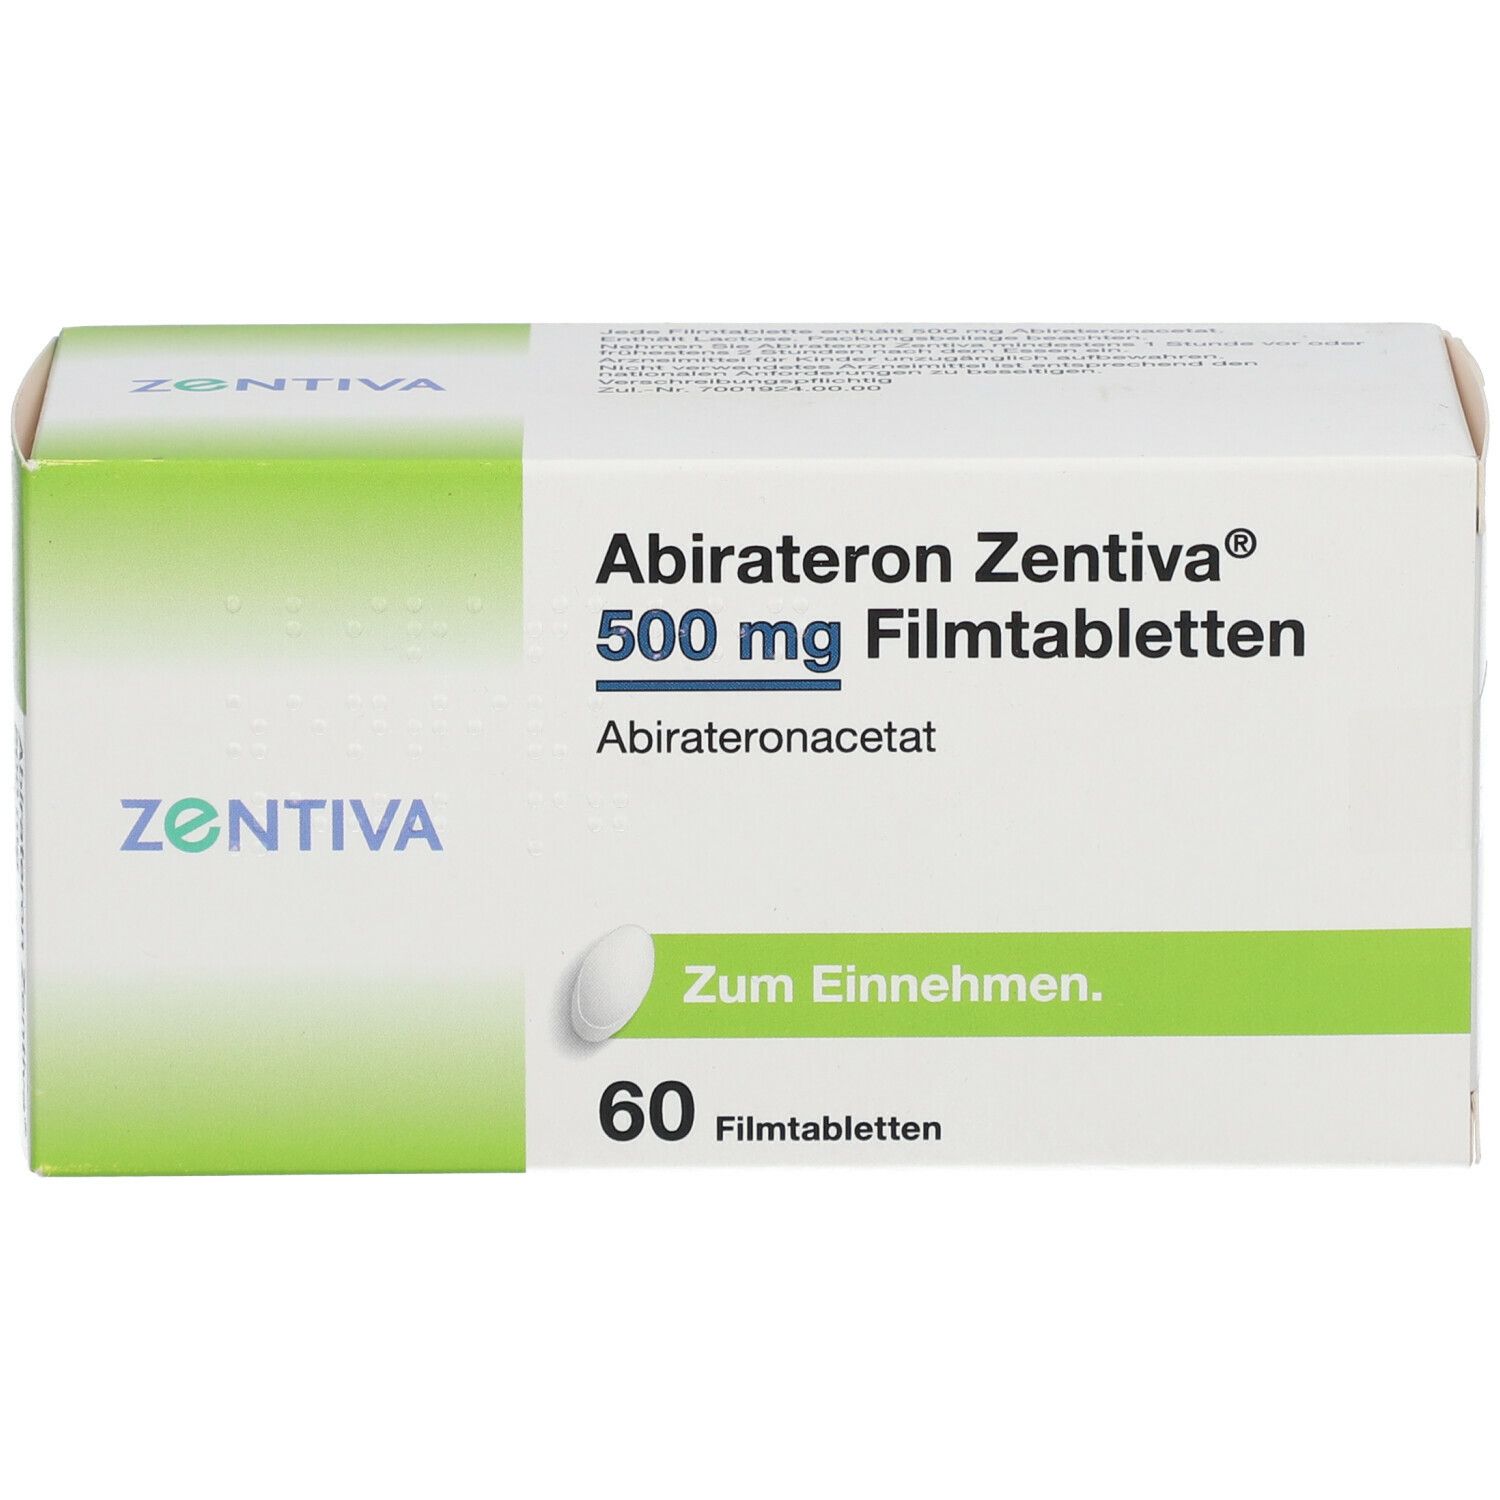 Abirateron Zentiva 500 mg Filmtabletten